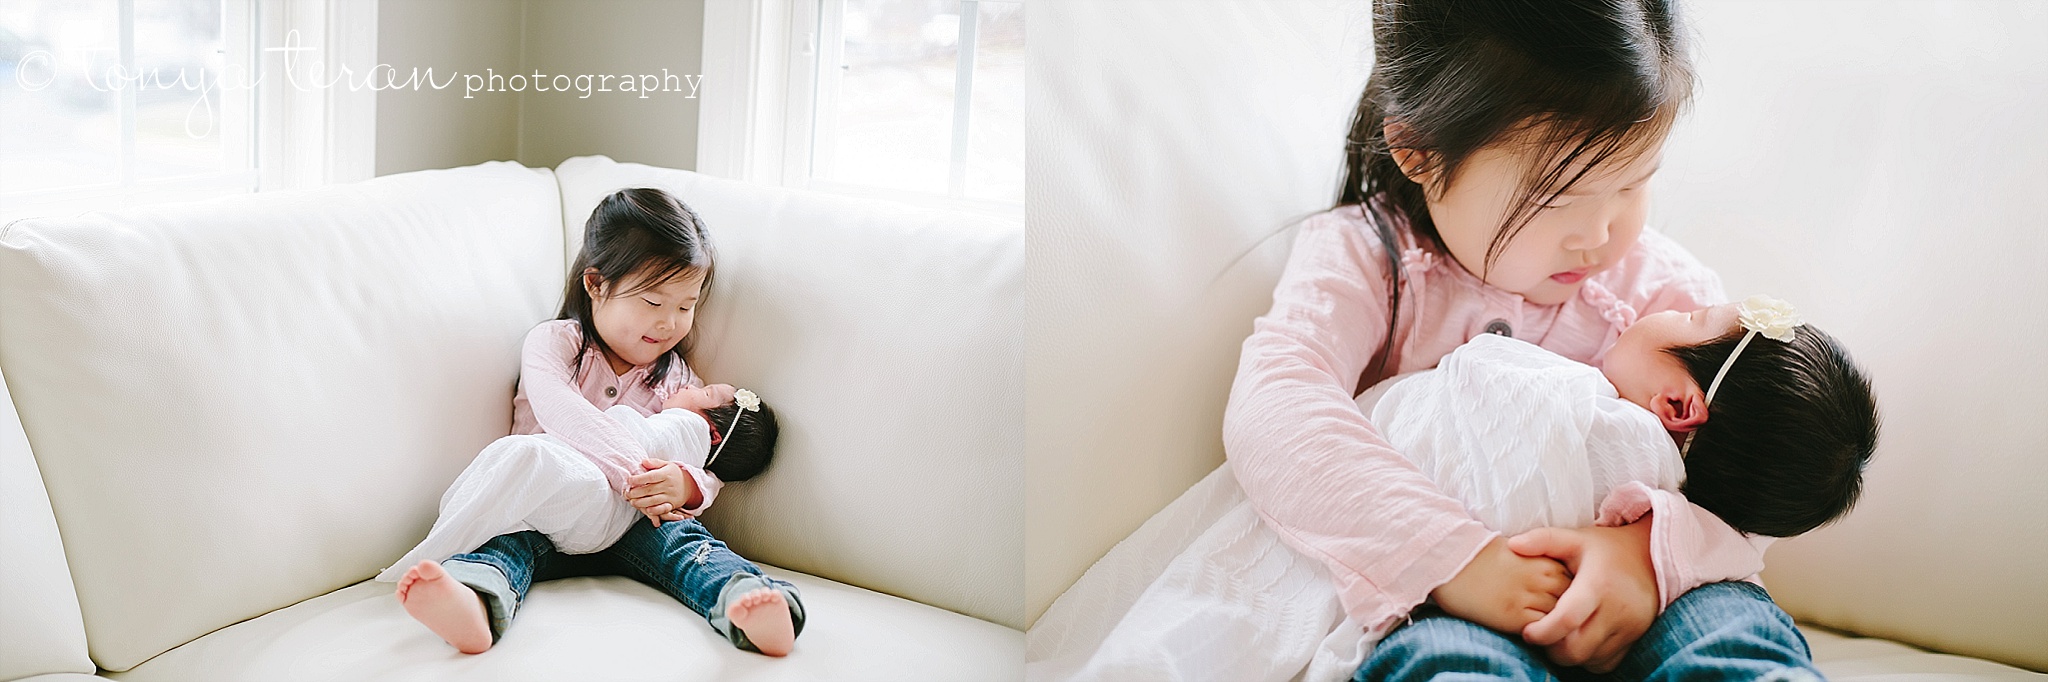 Lifestyle Family Newborn Photo Session | Tonya Teran Photography, Gaithersburg, MD Newborn, Baby, and Family Photographer